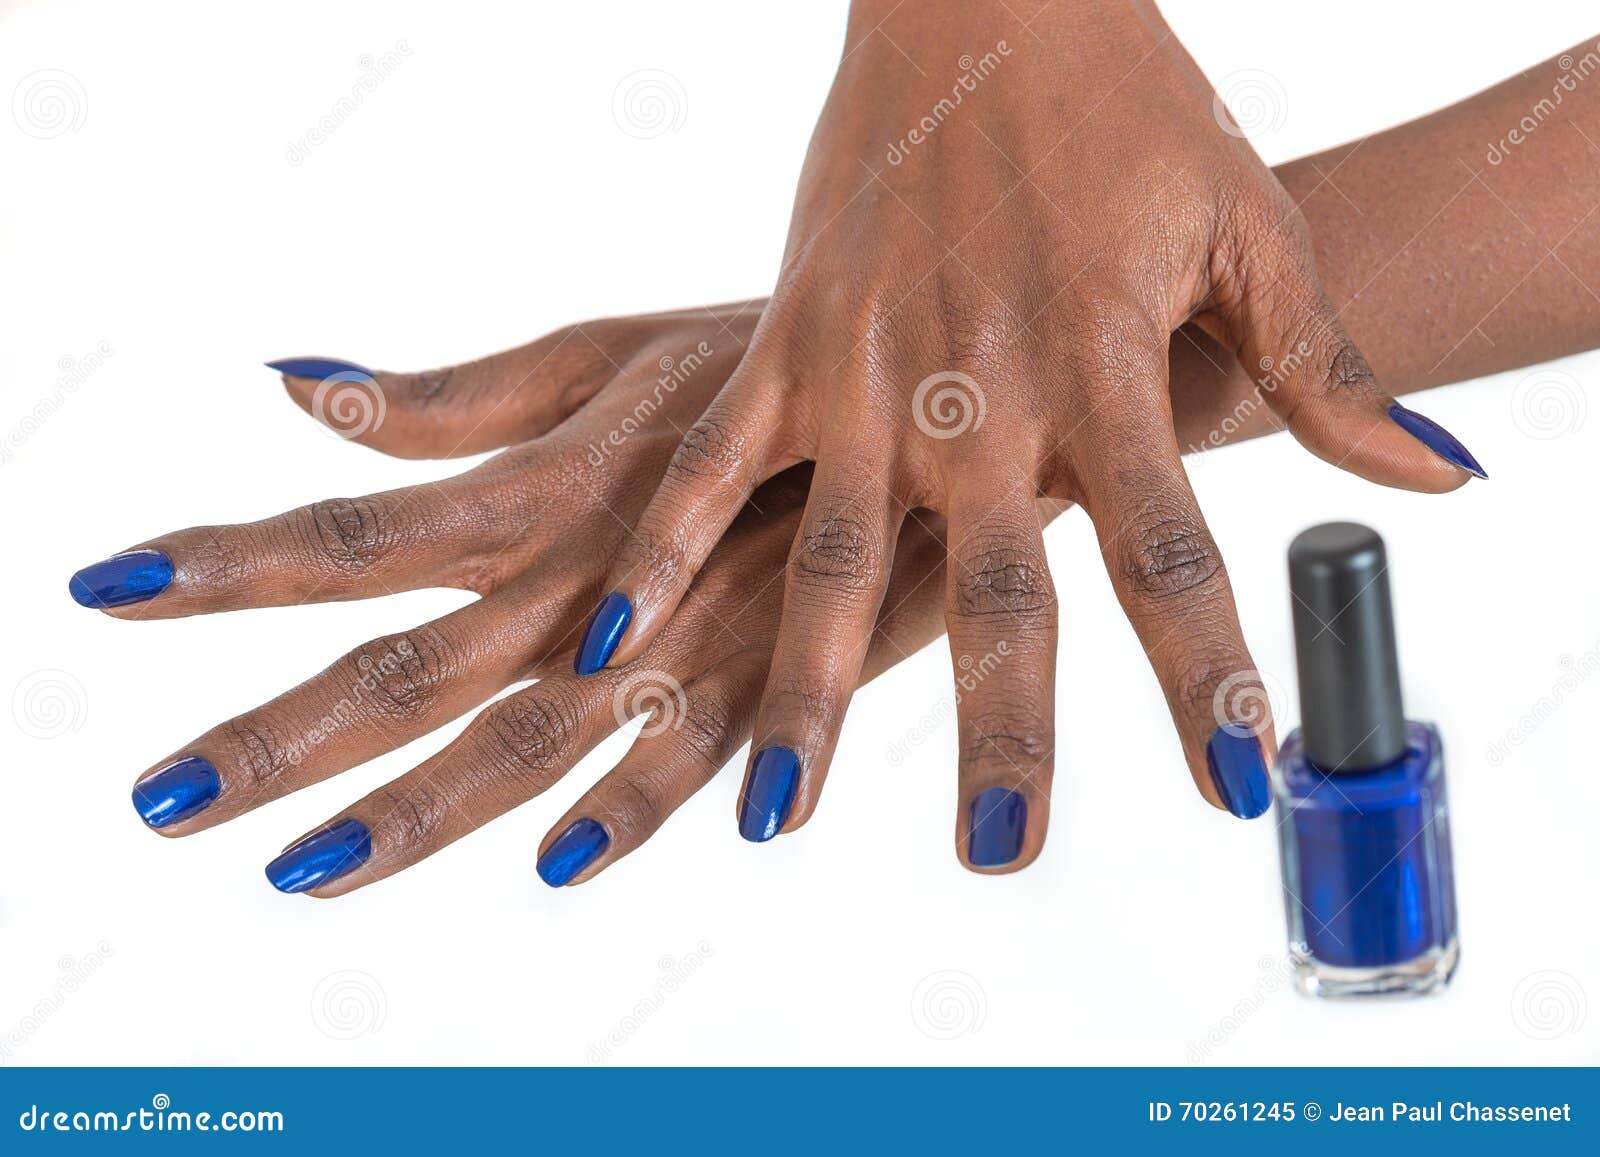 Rubber base gel on natural nails 💅🏾 #nails #parklandsnails #manicure #gel  #pedicure #nails #naildesign #nailporn #naillove #nailsof... | Instagram